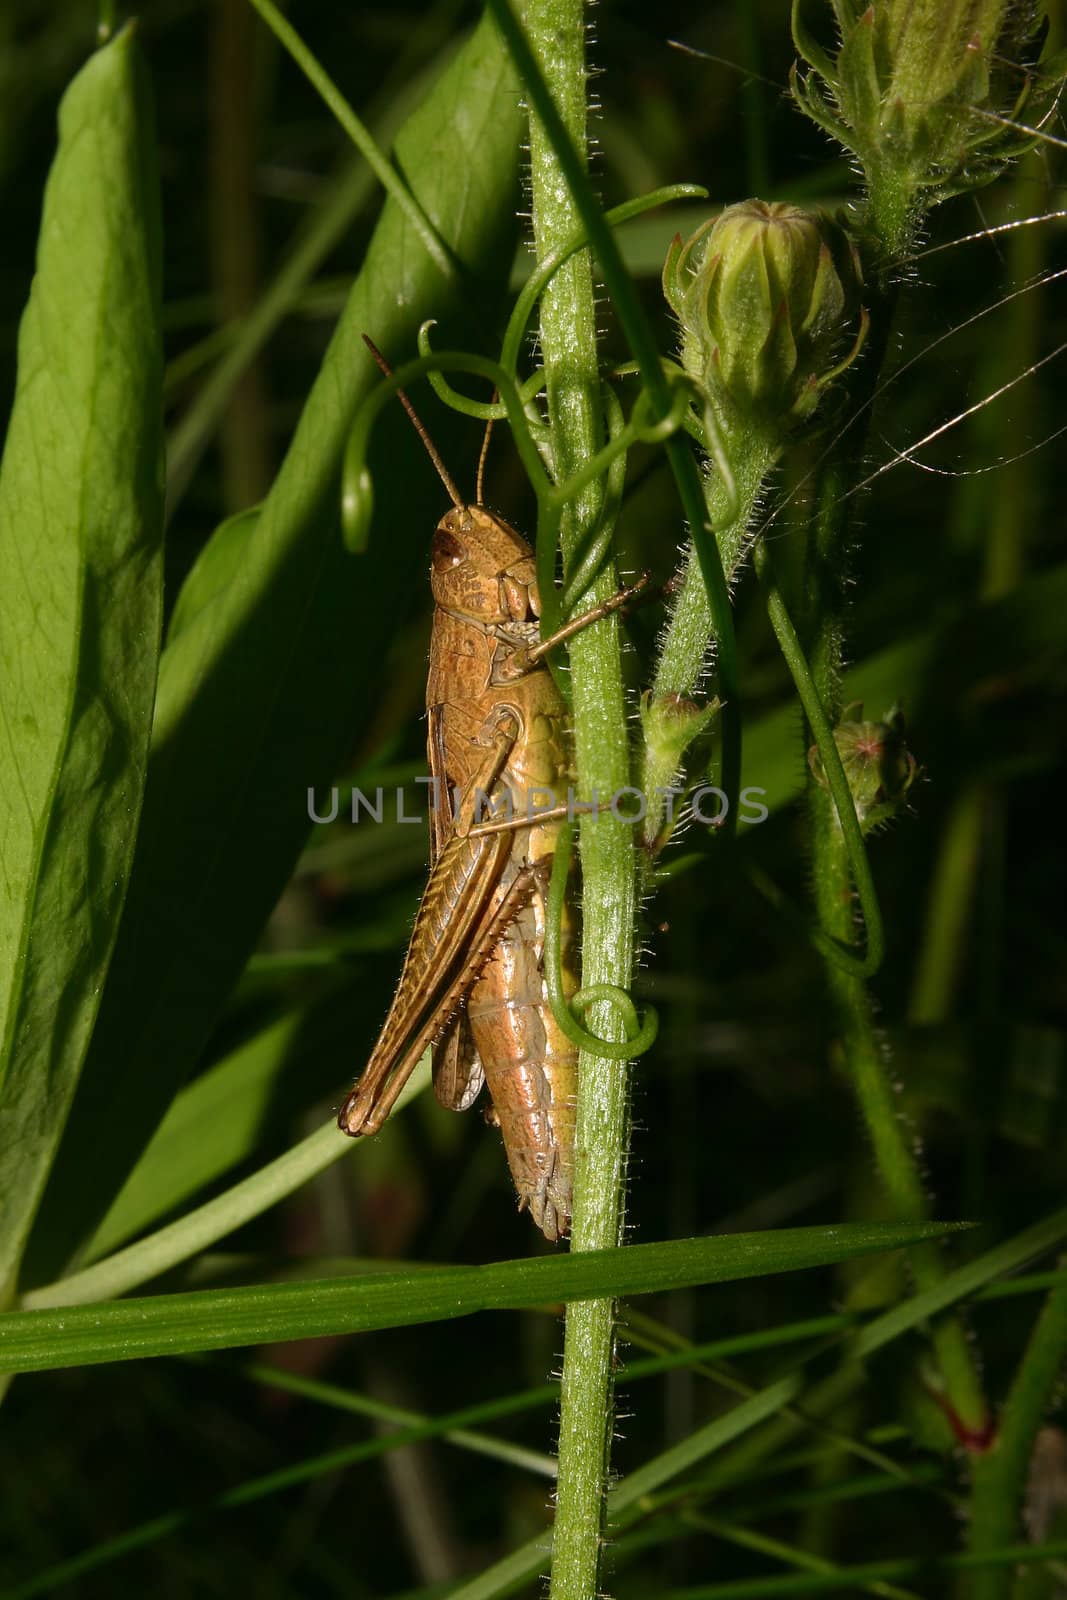 Field grasshopper (Chorthippus apricarius) by tdietrich